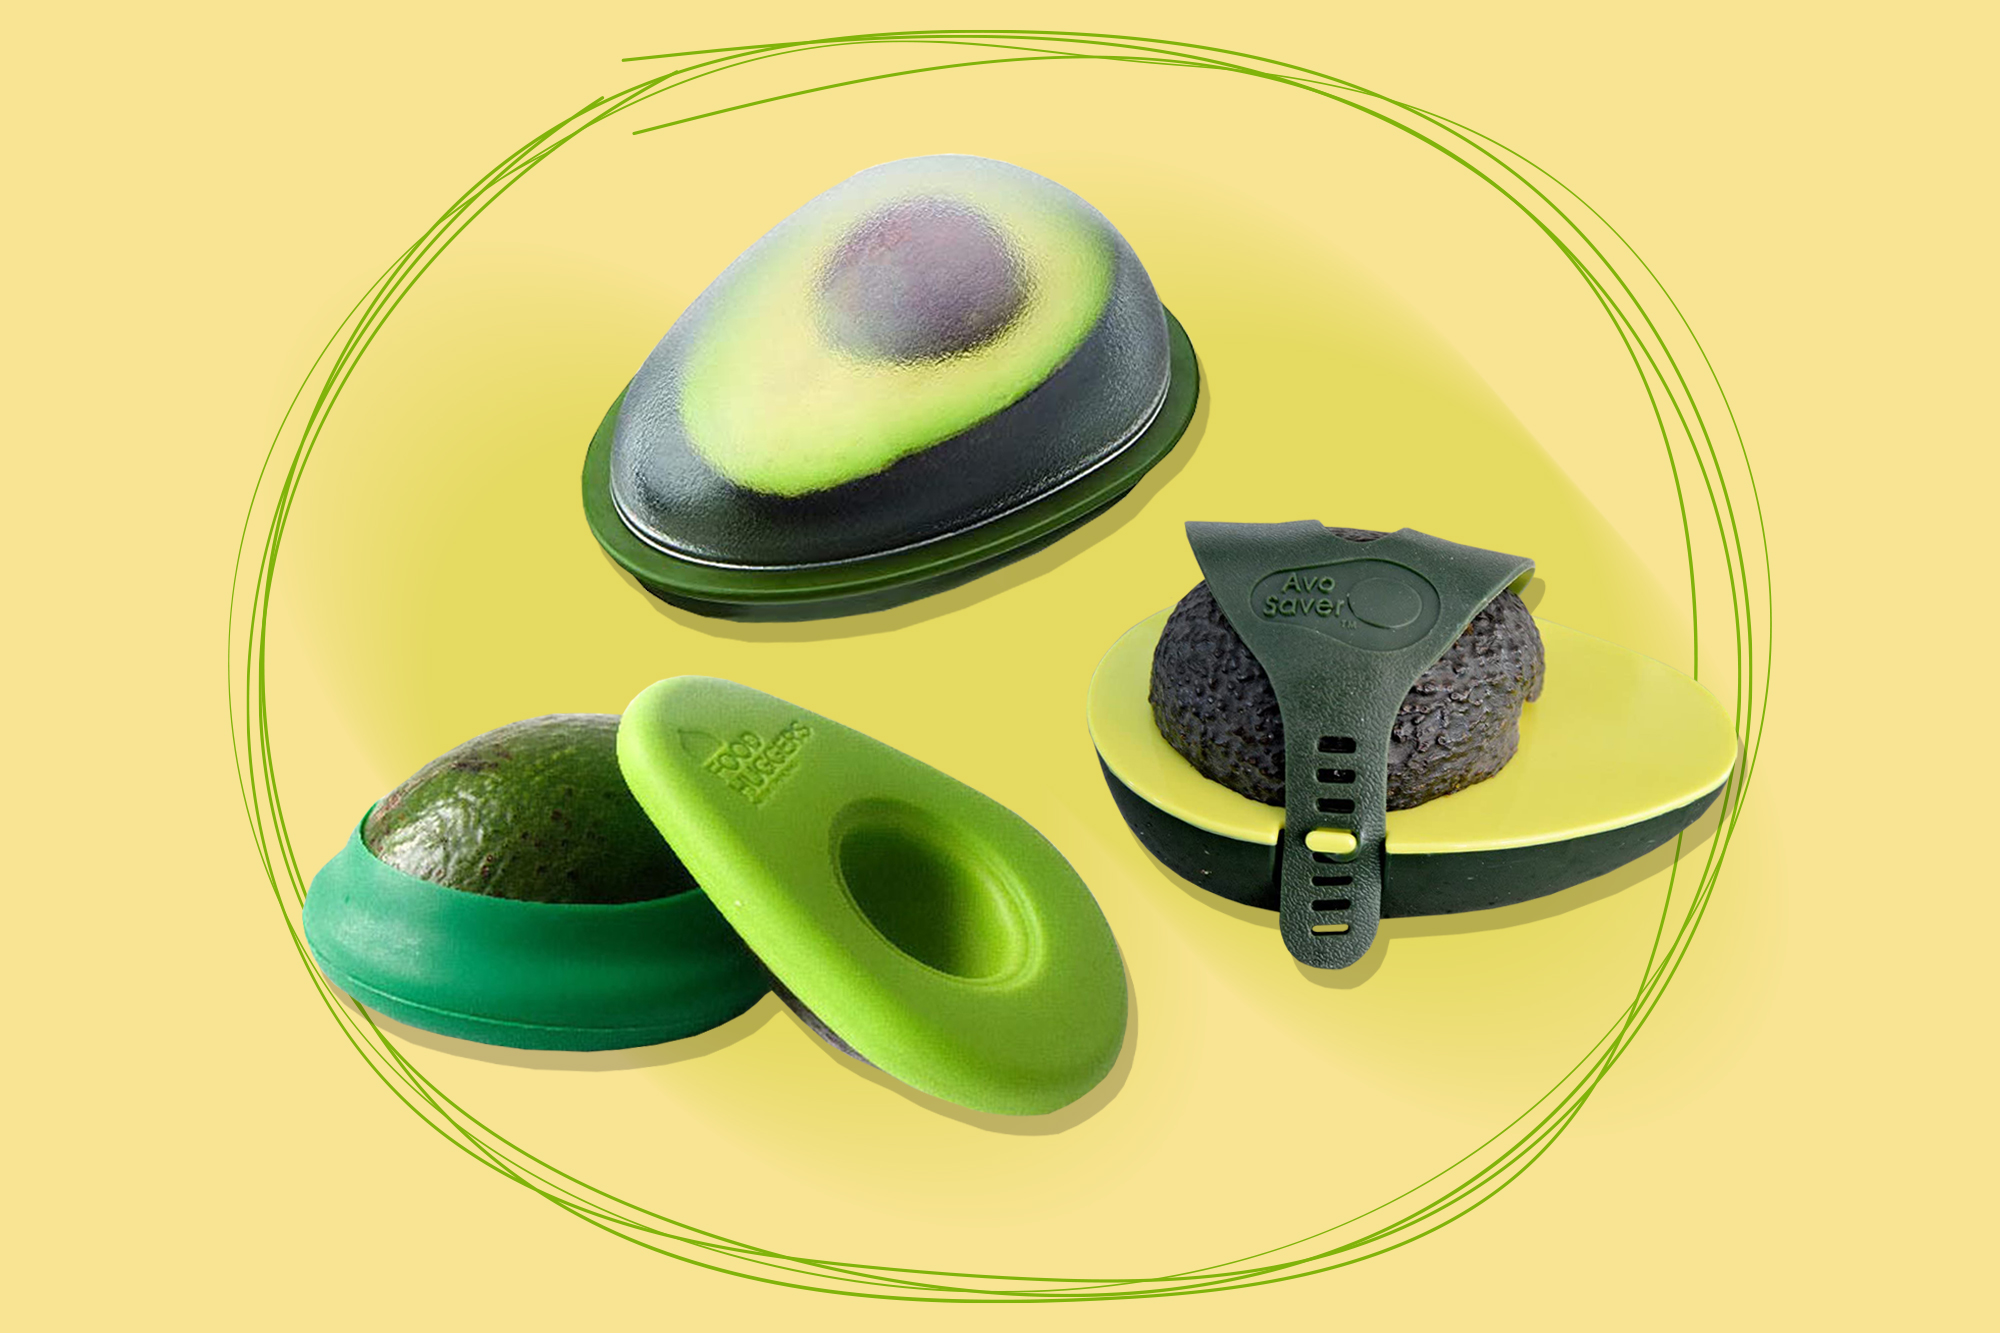 Green Avocado Huggers - Set of 2 - Refill Goodness